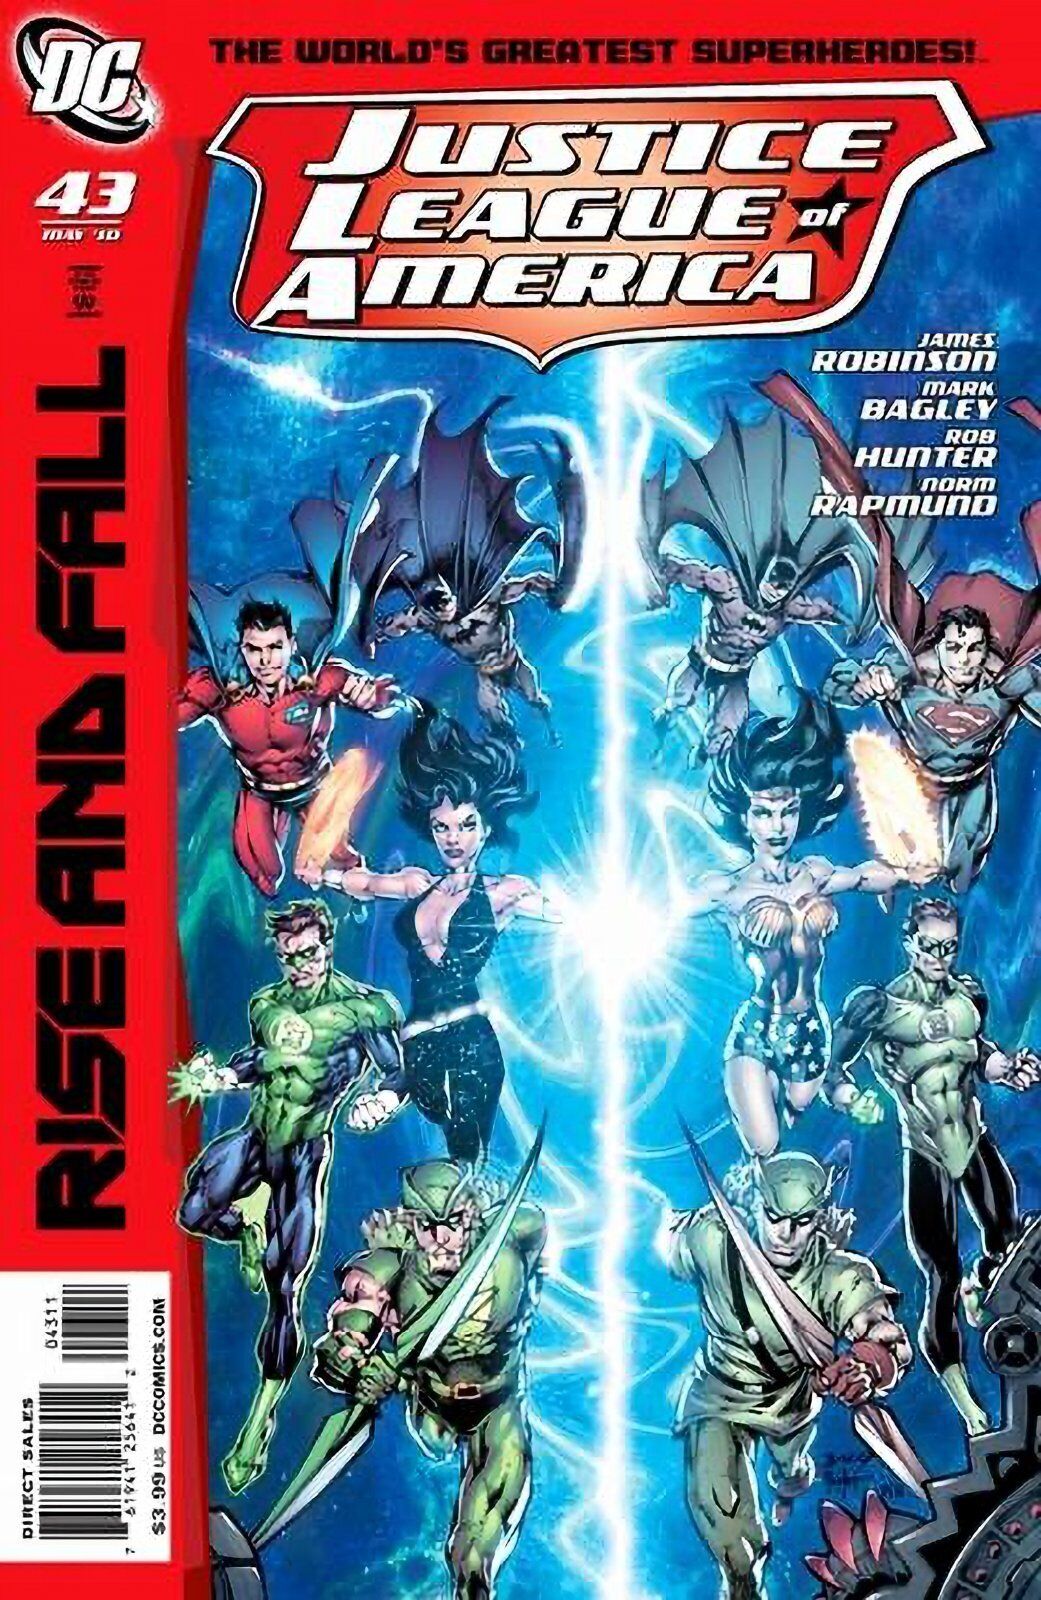 Justice League of America #43 (2006-2011) DC Comics